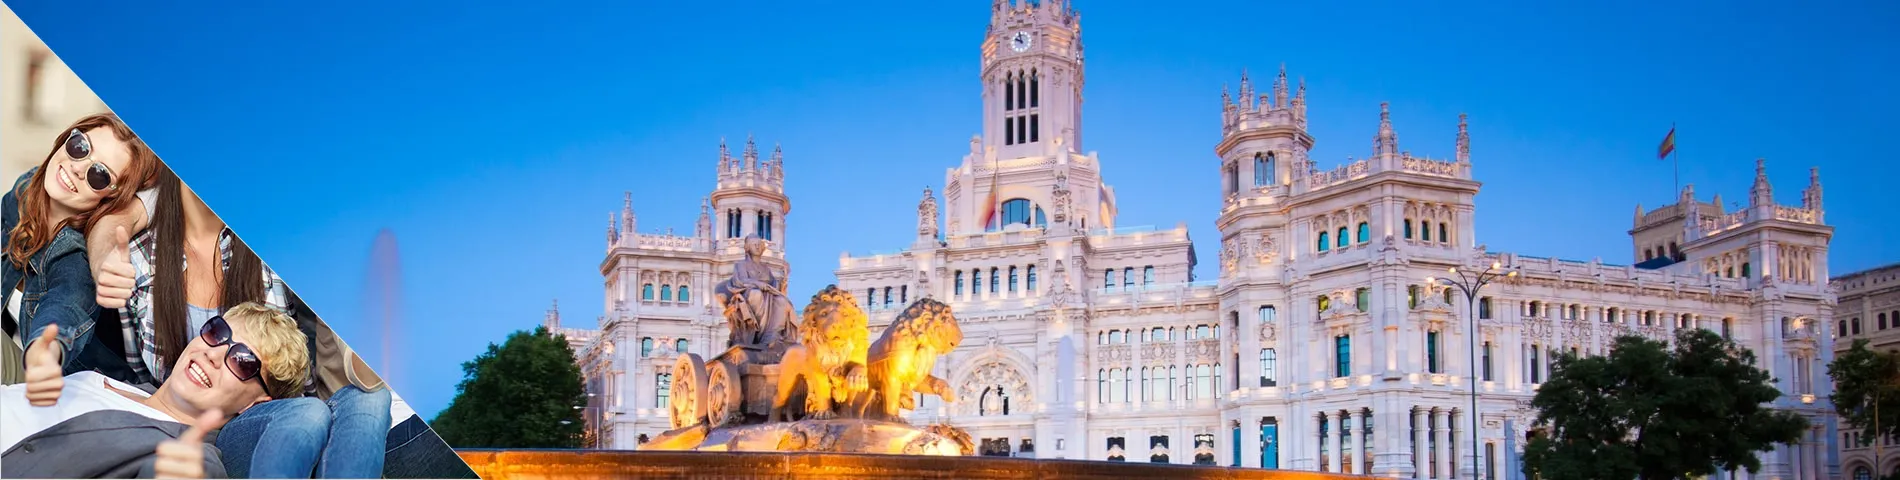 Madrid - School Trips / Groups